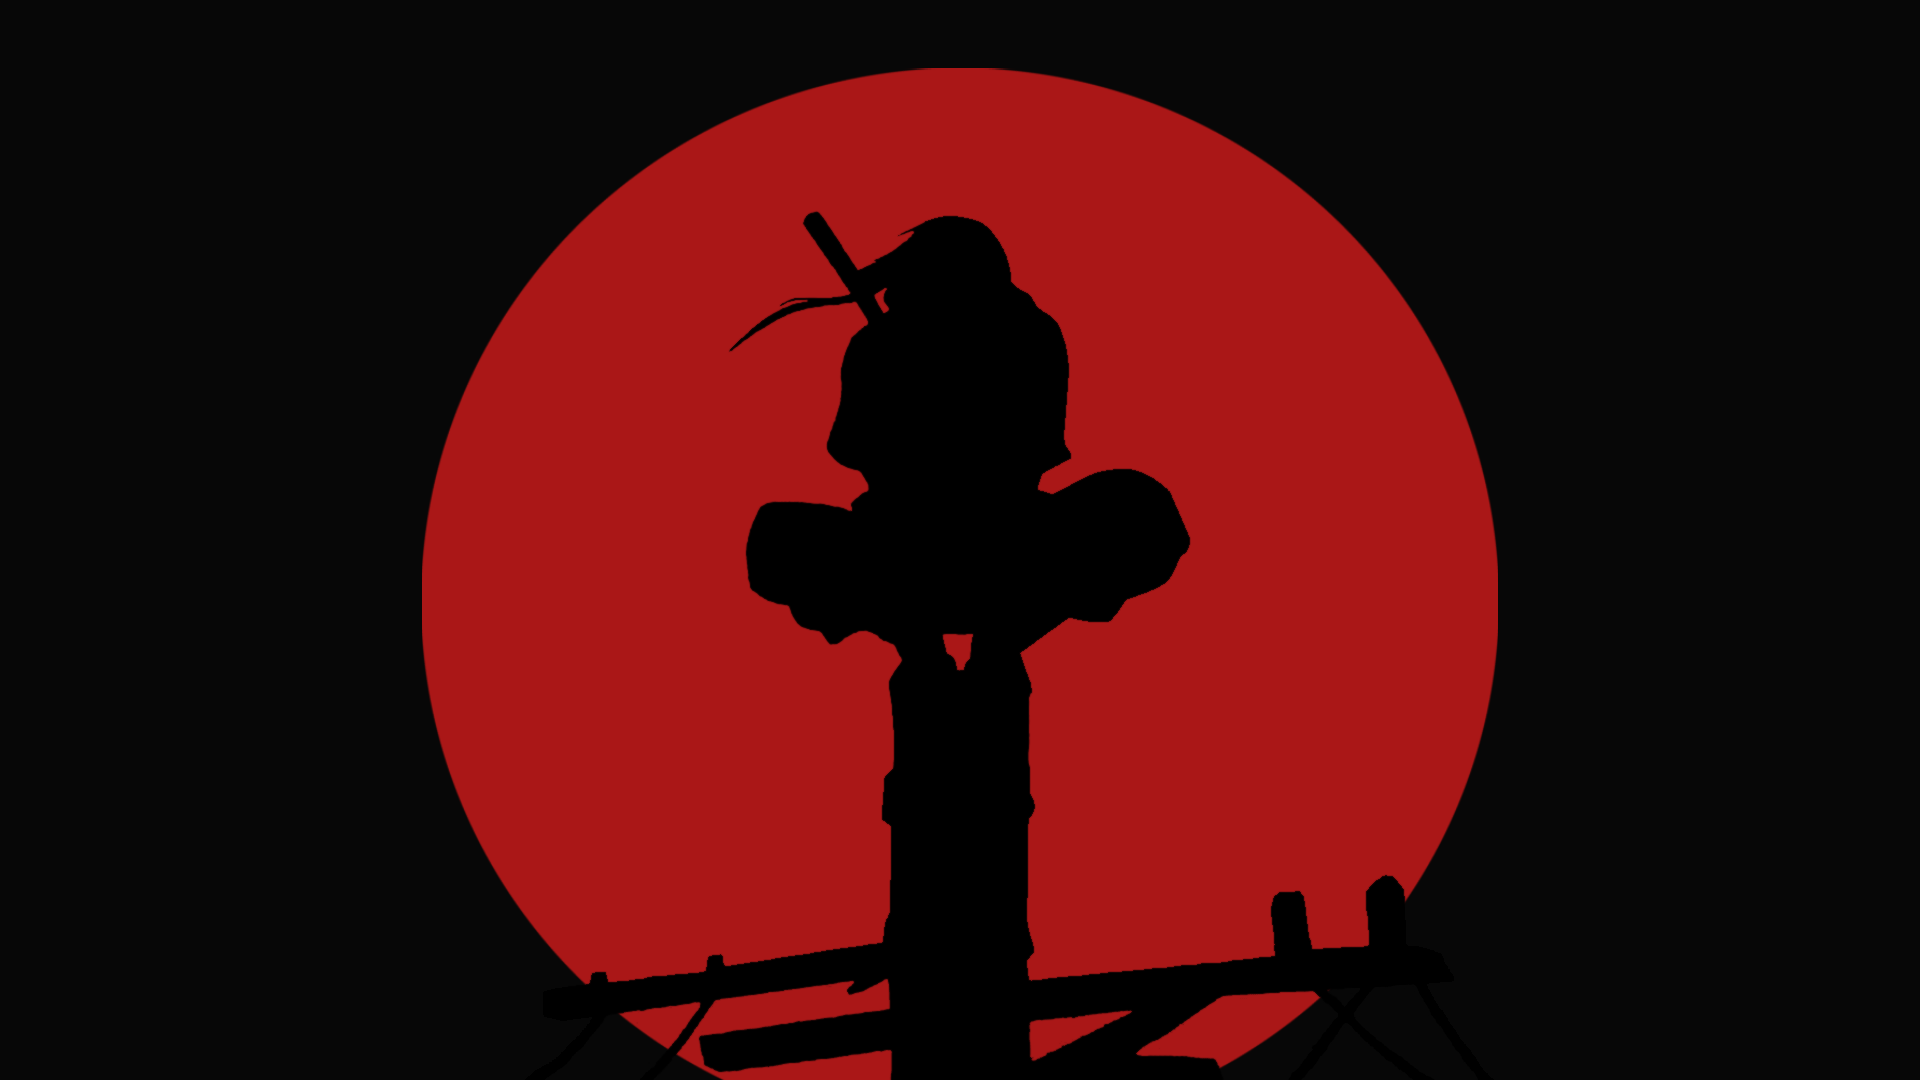 Naruto Anime Uchiha Itachi Moon Red Moon Frontal View Red Wallpaper:1920x1080